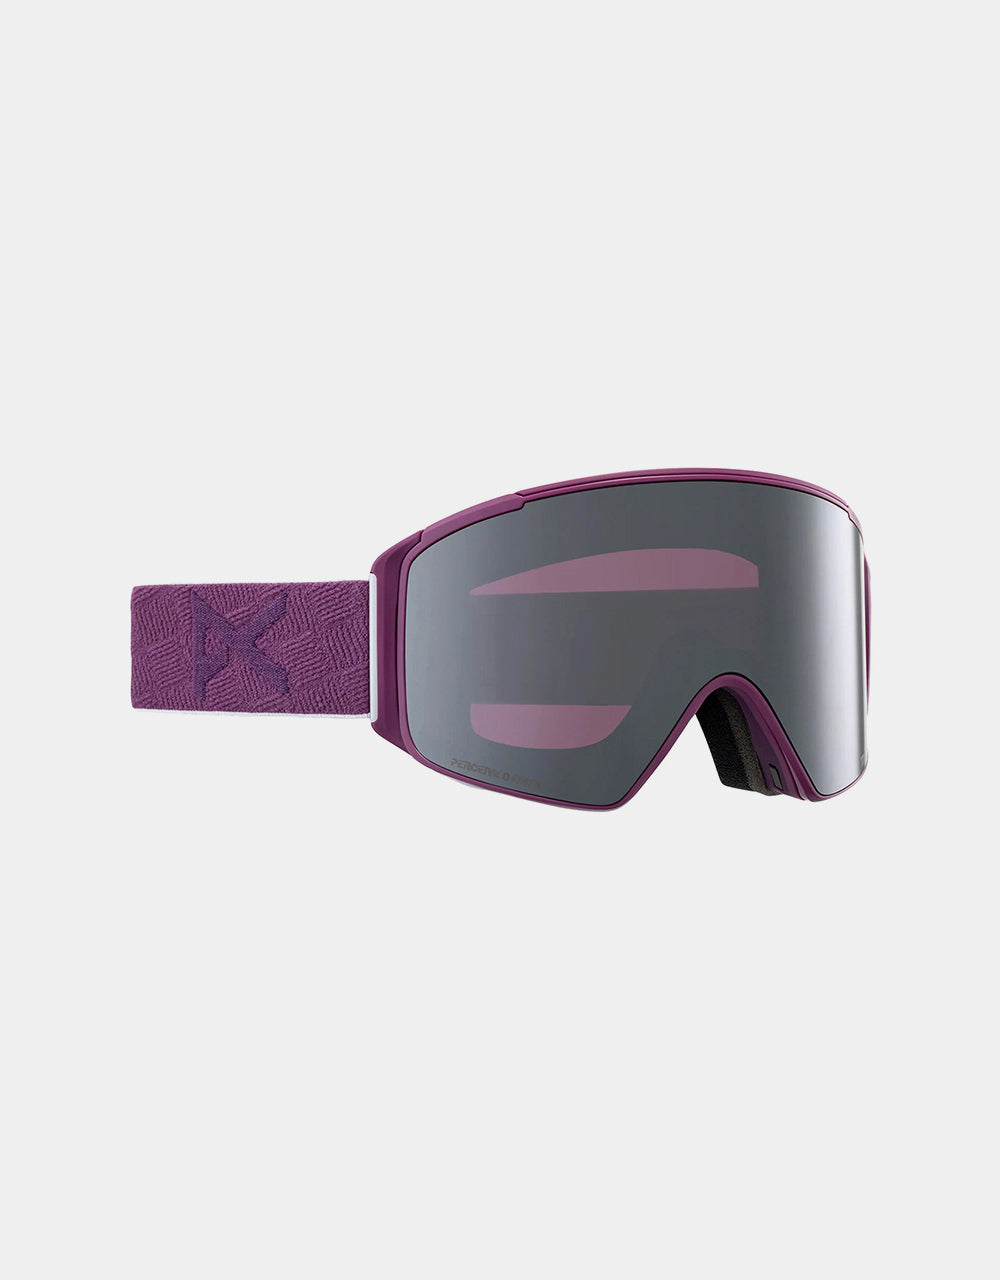 Anon M3 MFI® Snowboard Goggles - Pollard/Perceive Sunny Onyx 